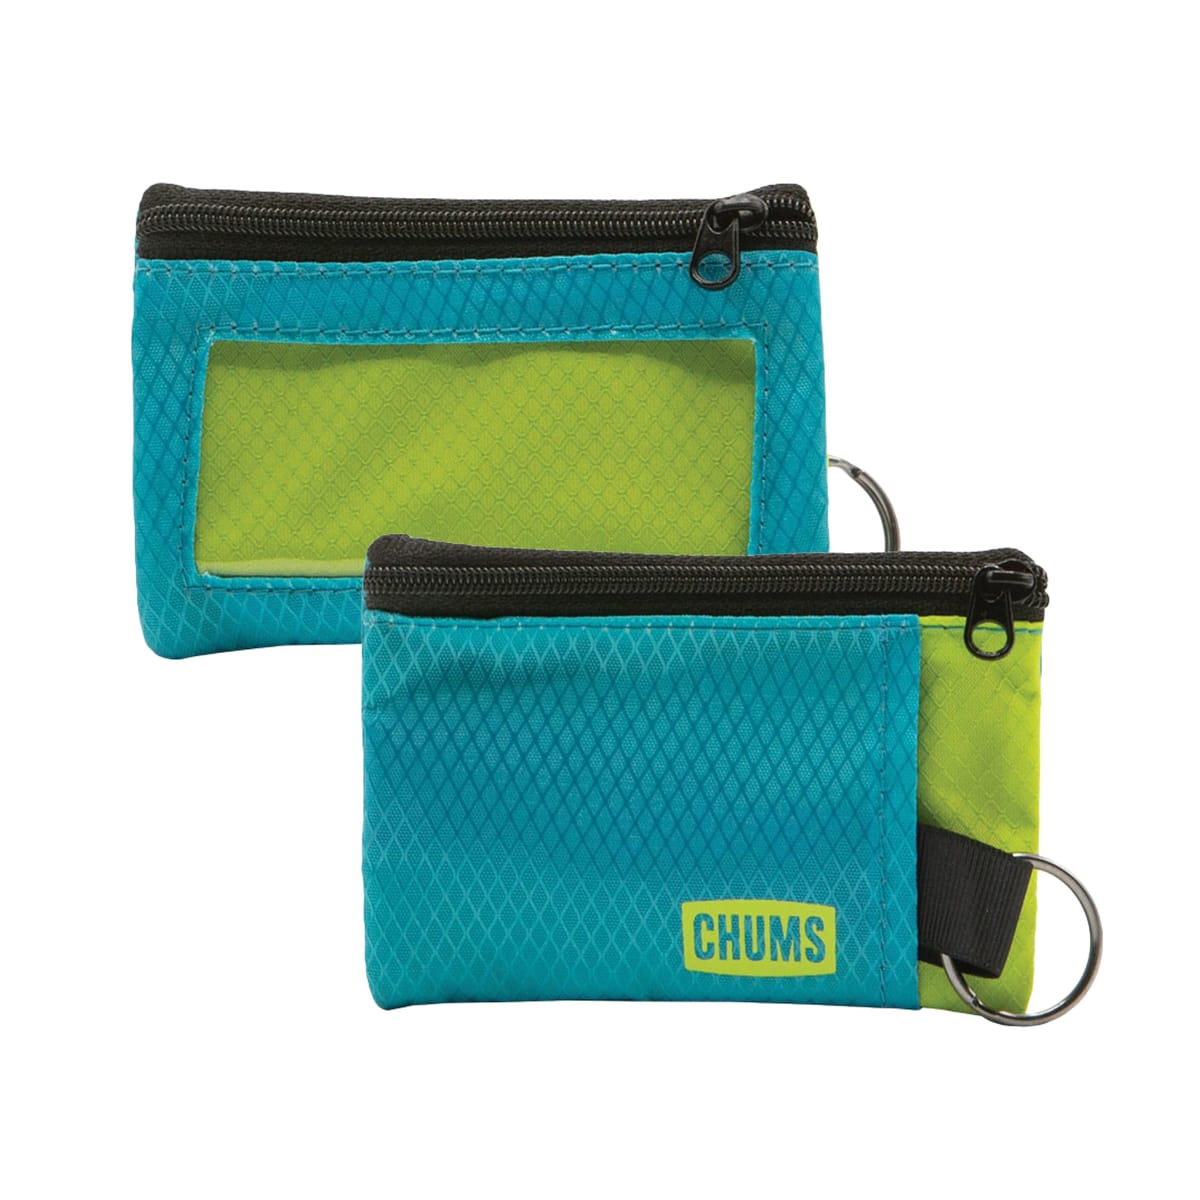 Chums (チャムス) サーフショーツ財布 - 軽量 ファスナー付き ミニマリスト財布 透明のIDウィンドウ付き - 耐水性 キーリング付き (ブルー/グリーン)